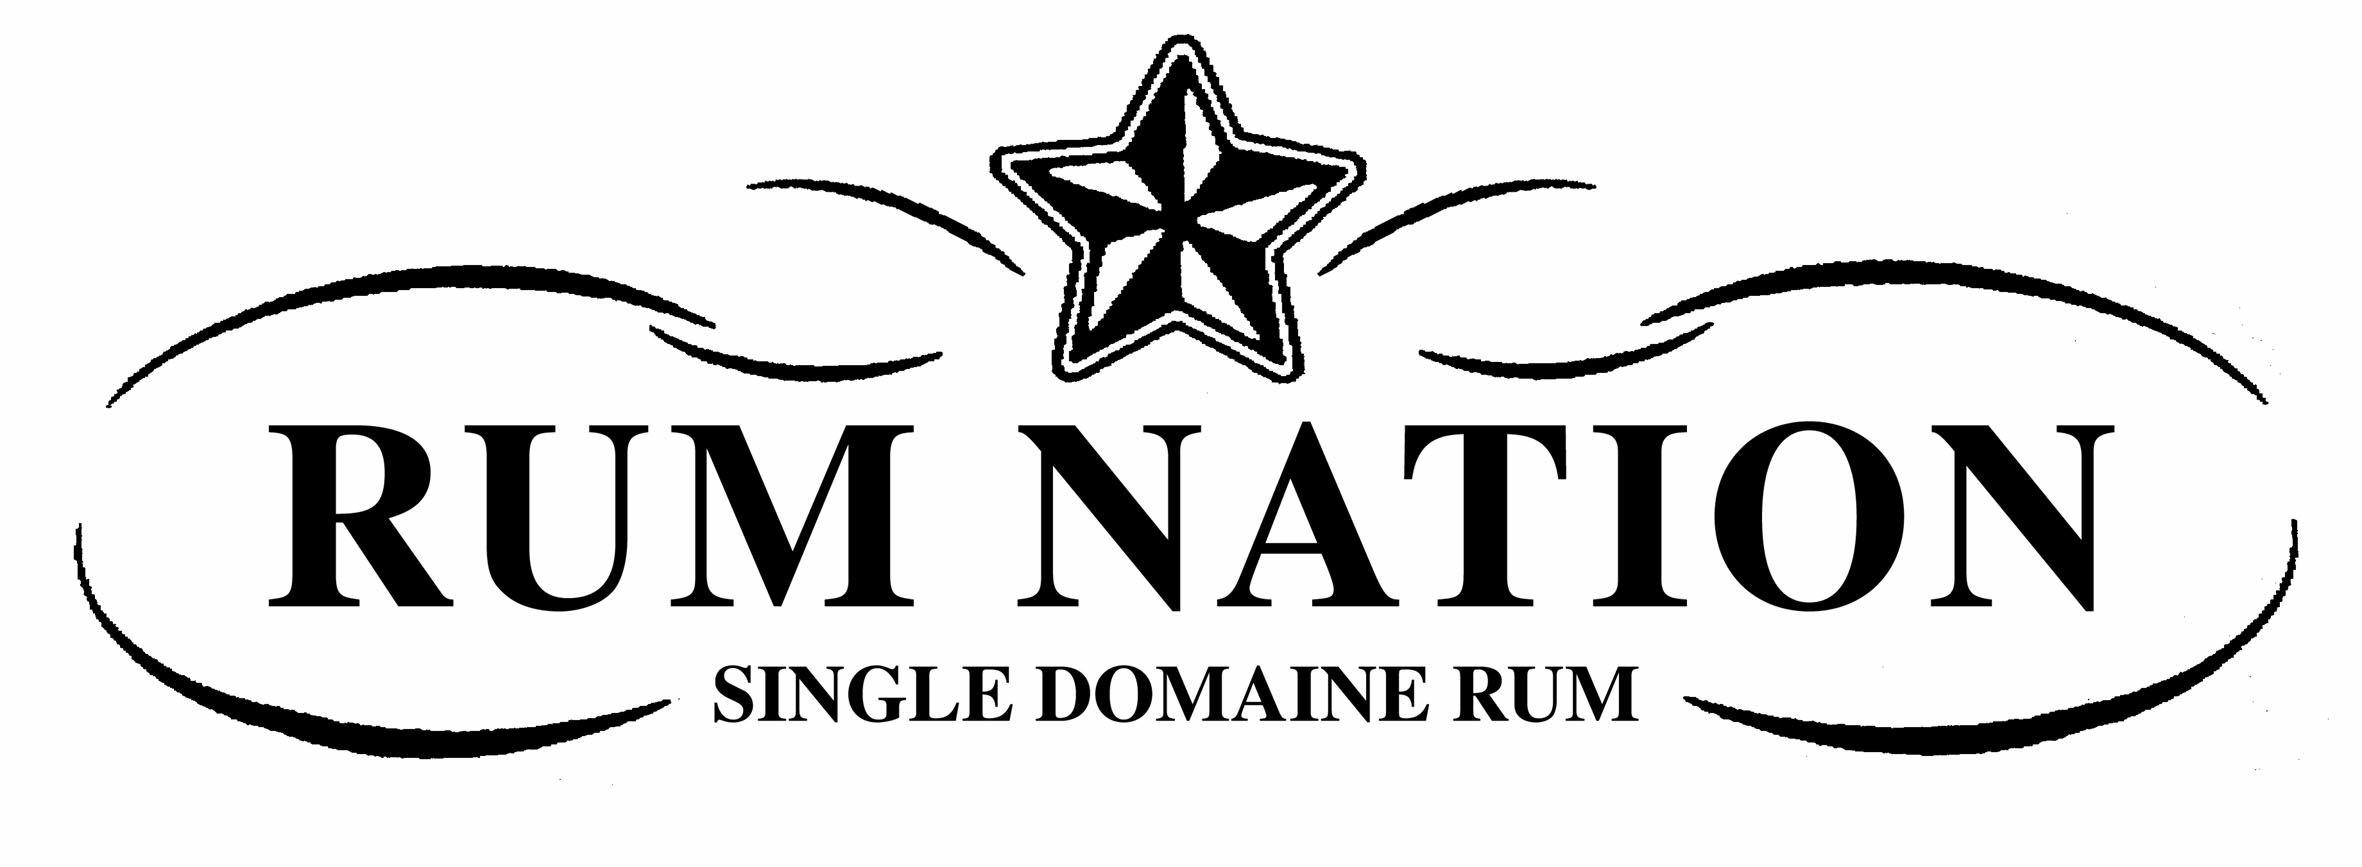 Rum Logo - Rum Nation logo 2 | Rumfest Berlin